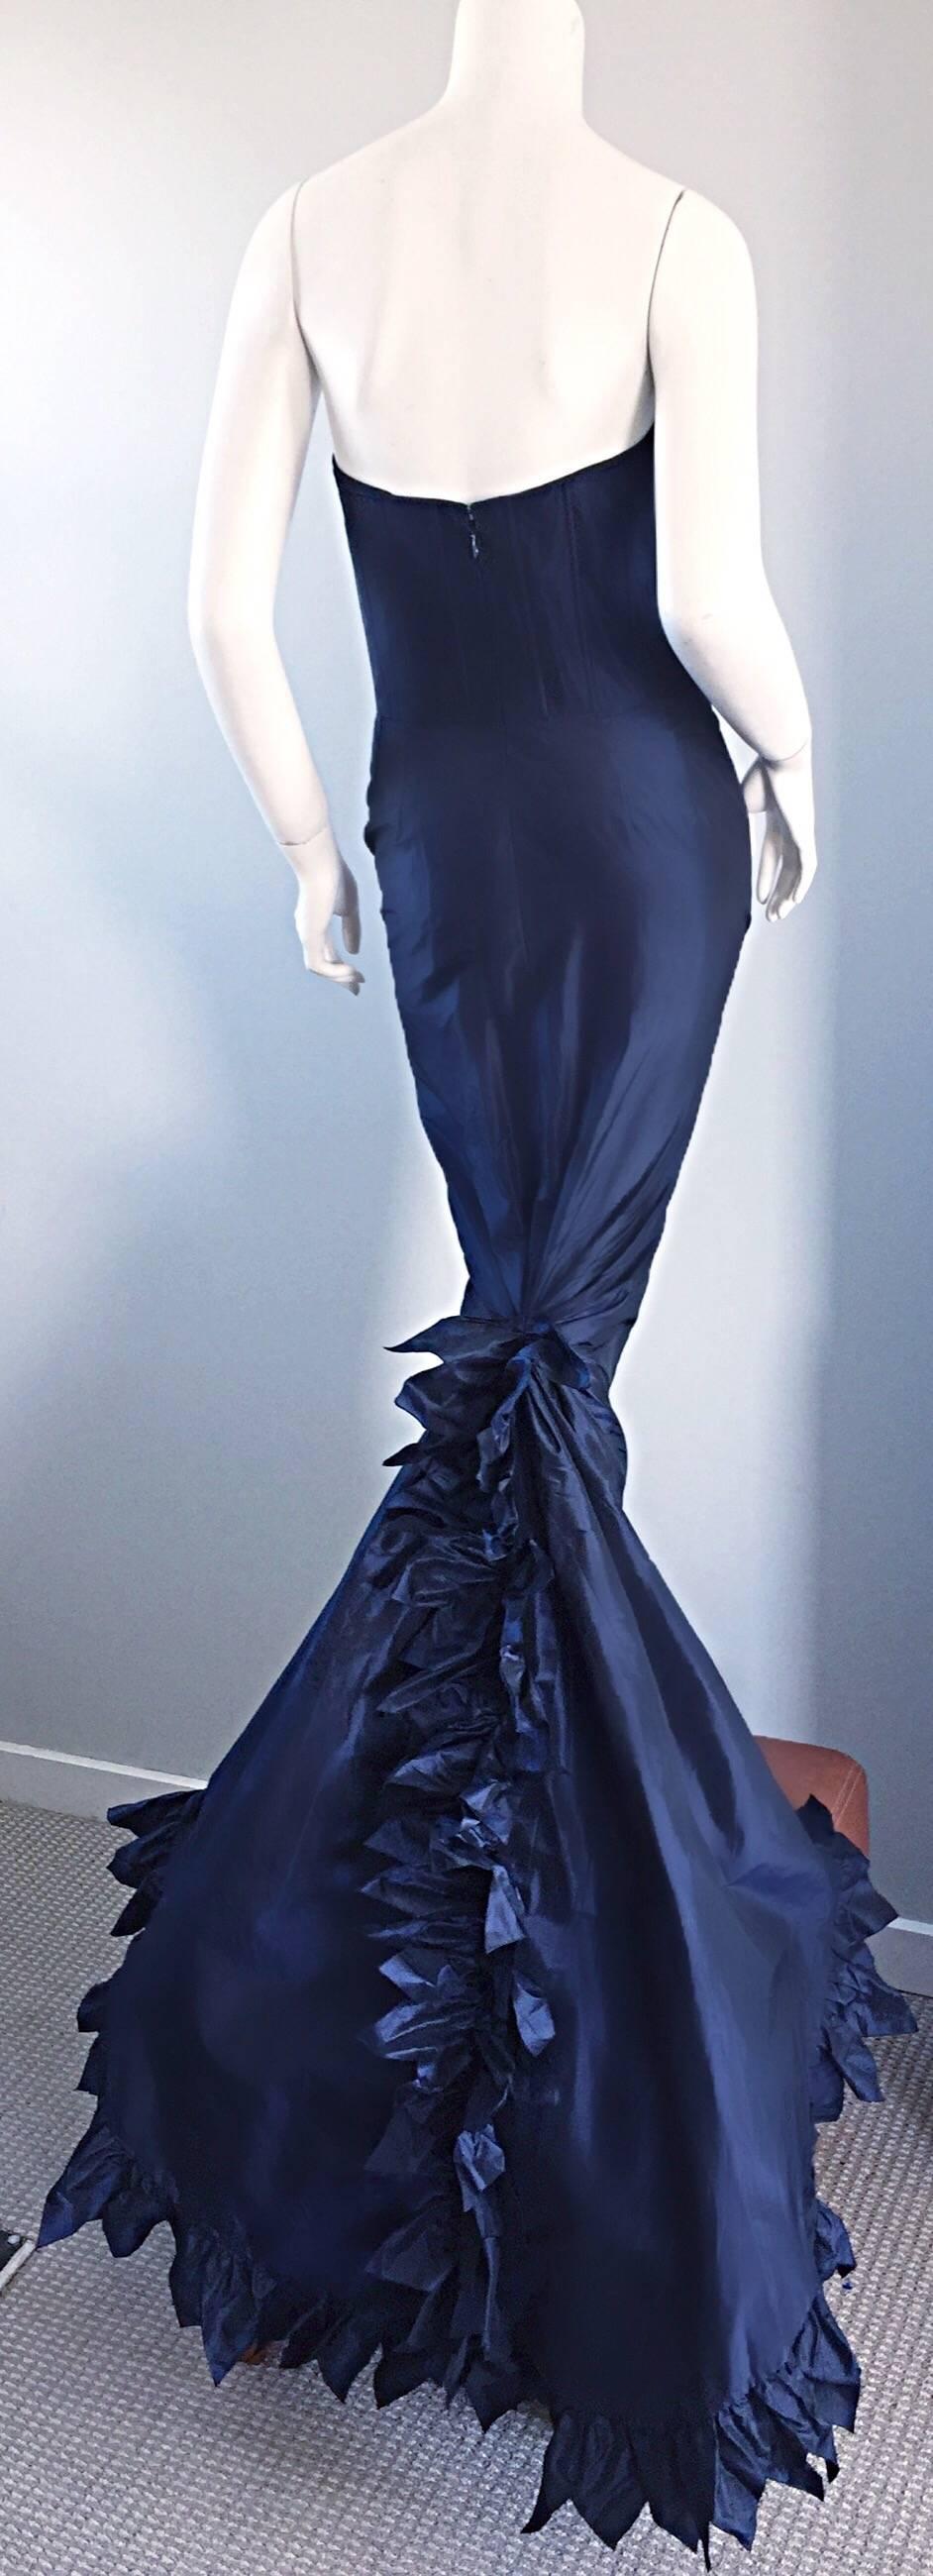 Exquisite Vintage Oscar de la Renta Navy Blue Silk Taffeta Dramatic Size 6 Gown 5